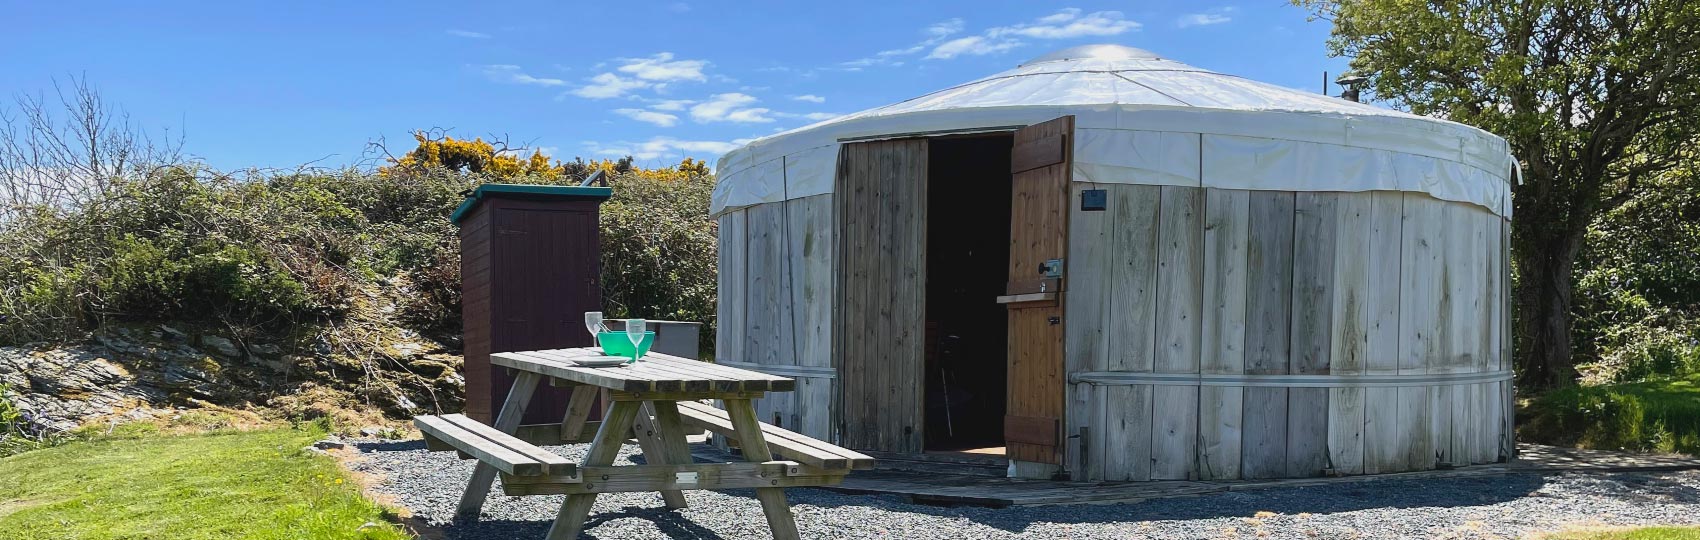 Caban camping yurt Llyn